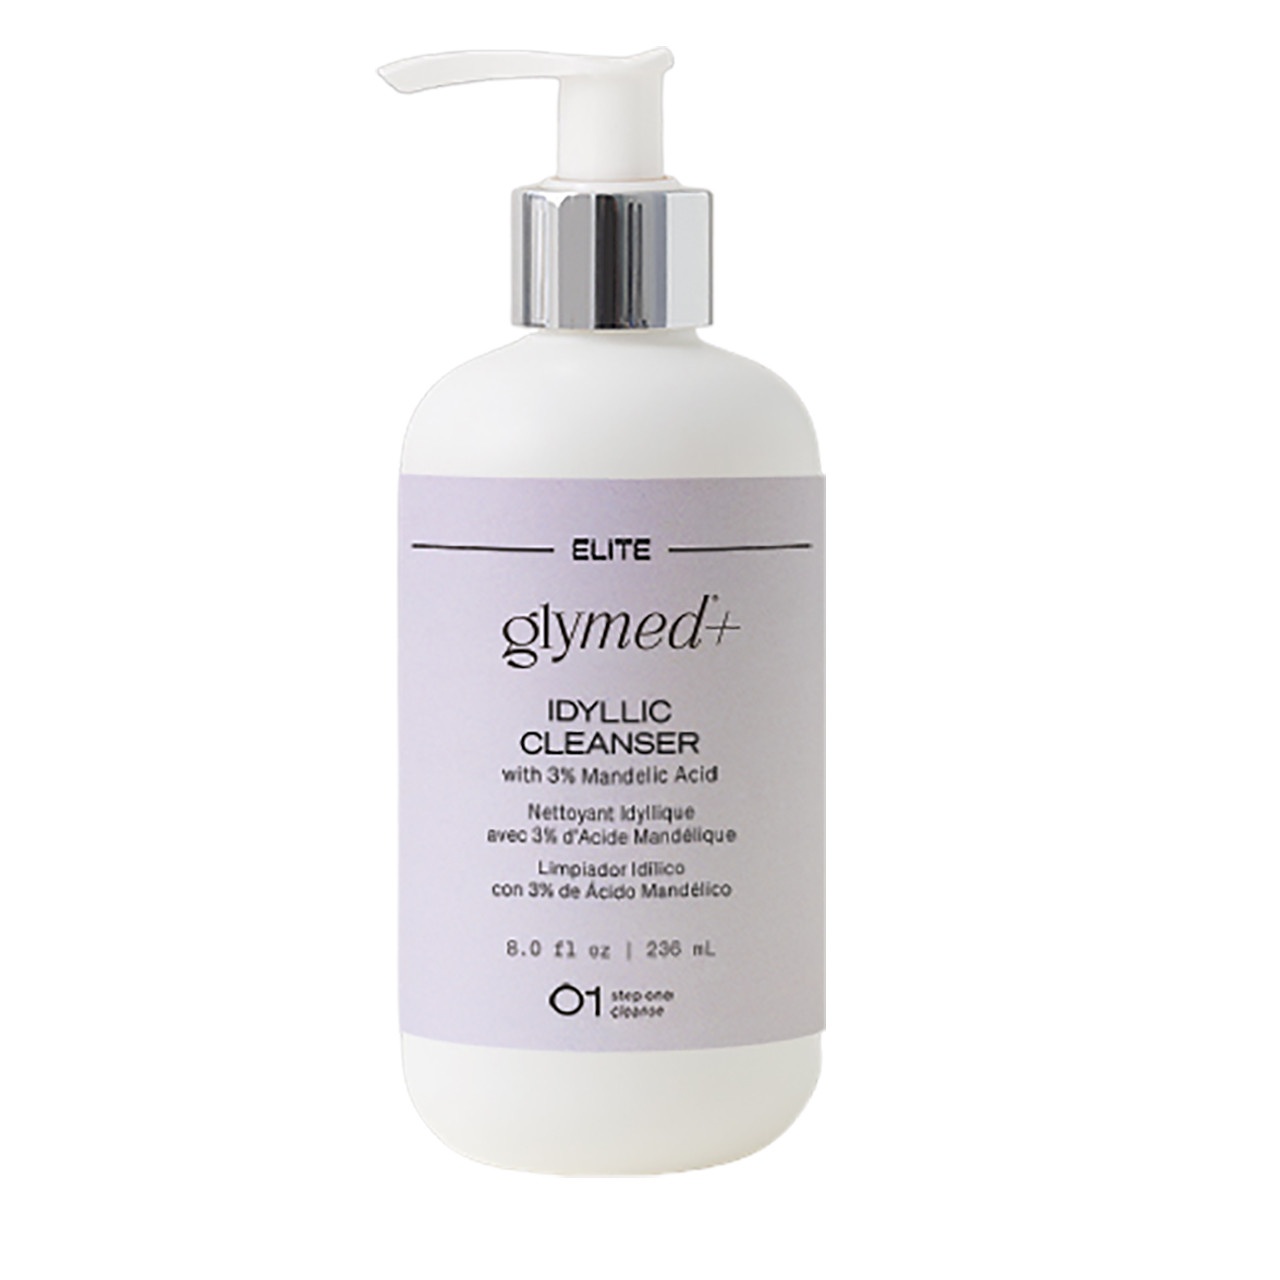 GlyMed + Idyllic Cleanser